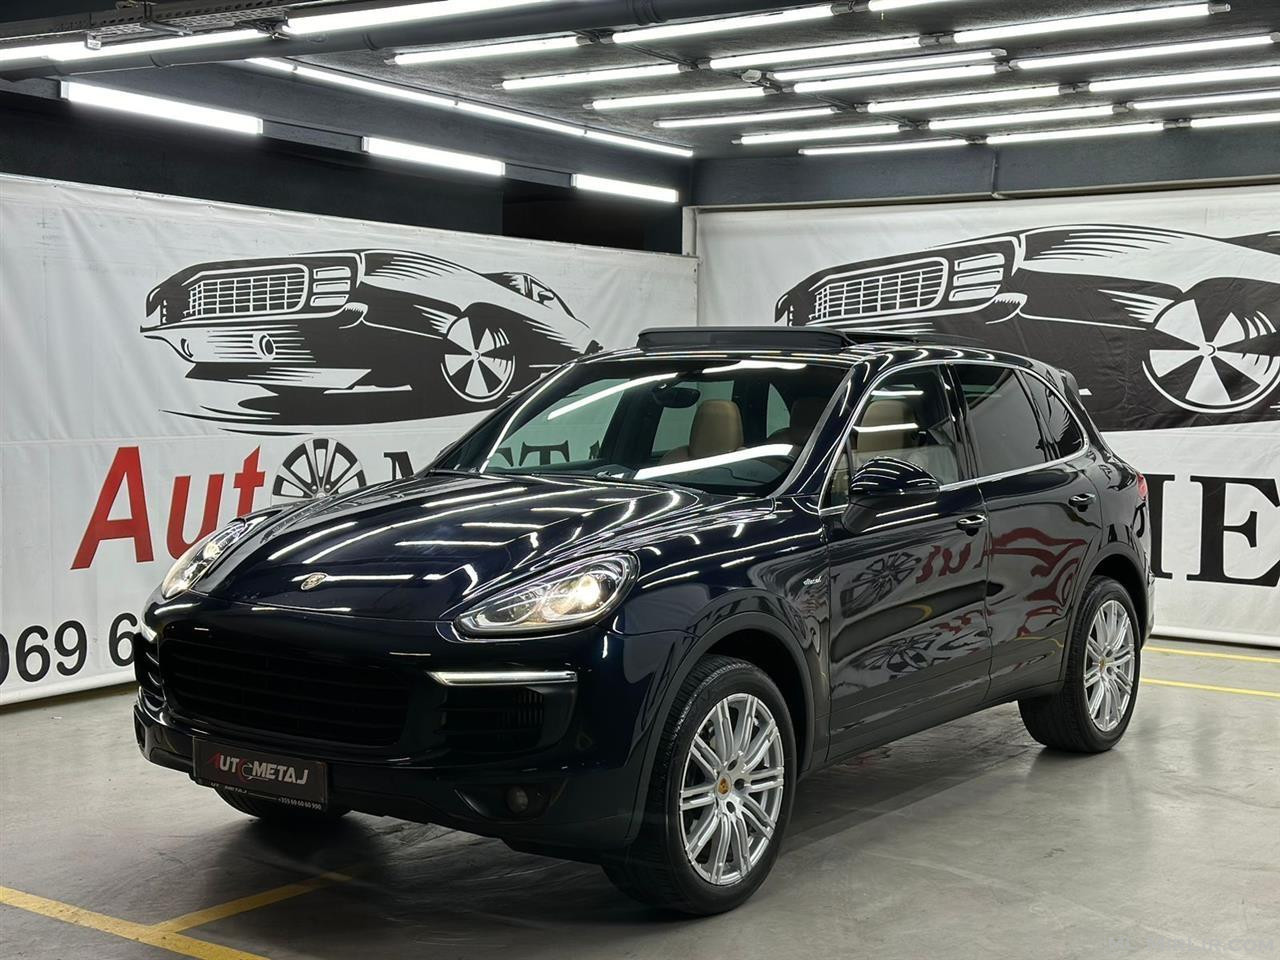  Porsche Cayenne  Viti Prodhimit Fundi 2015  3.0 Diesel